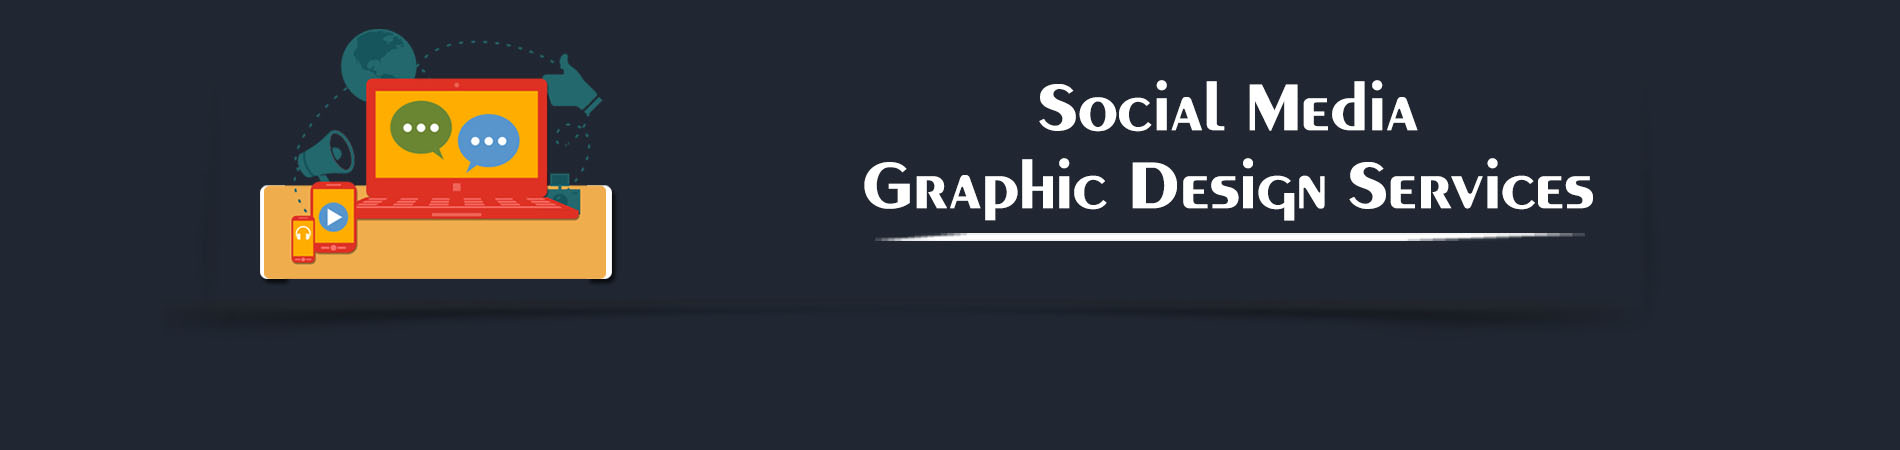 Social Media Graphic Design Services